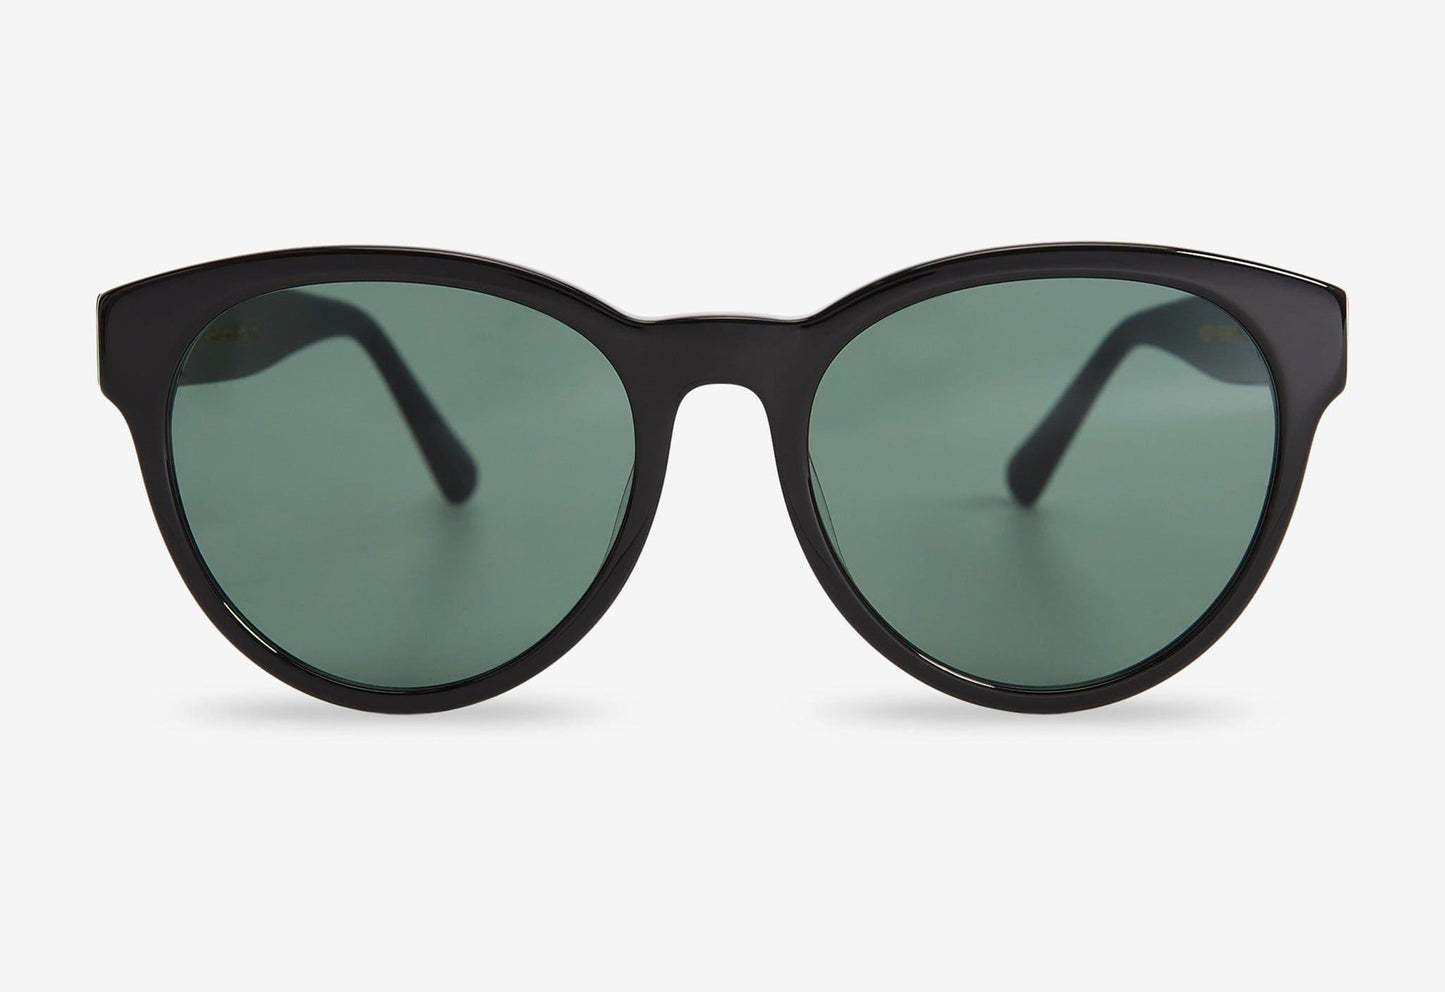 Rita, Round sunglasses for men and women green lens UV400 protection